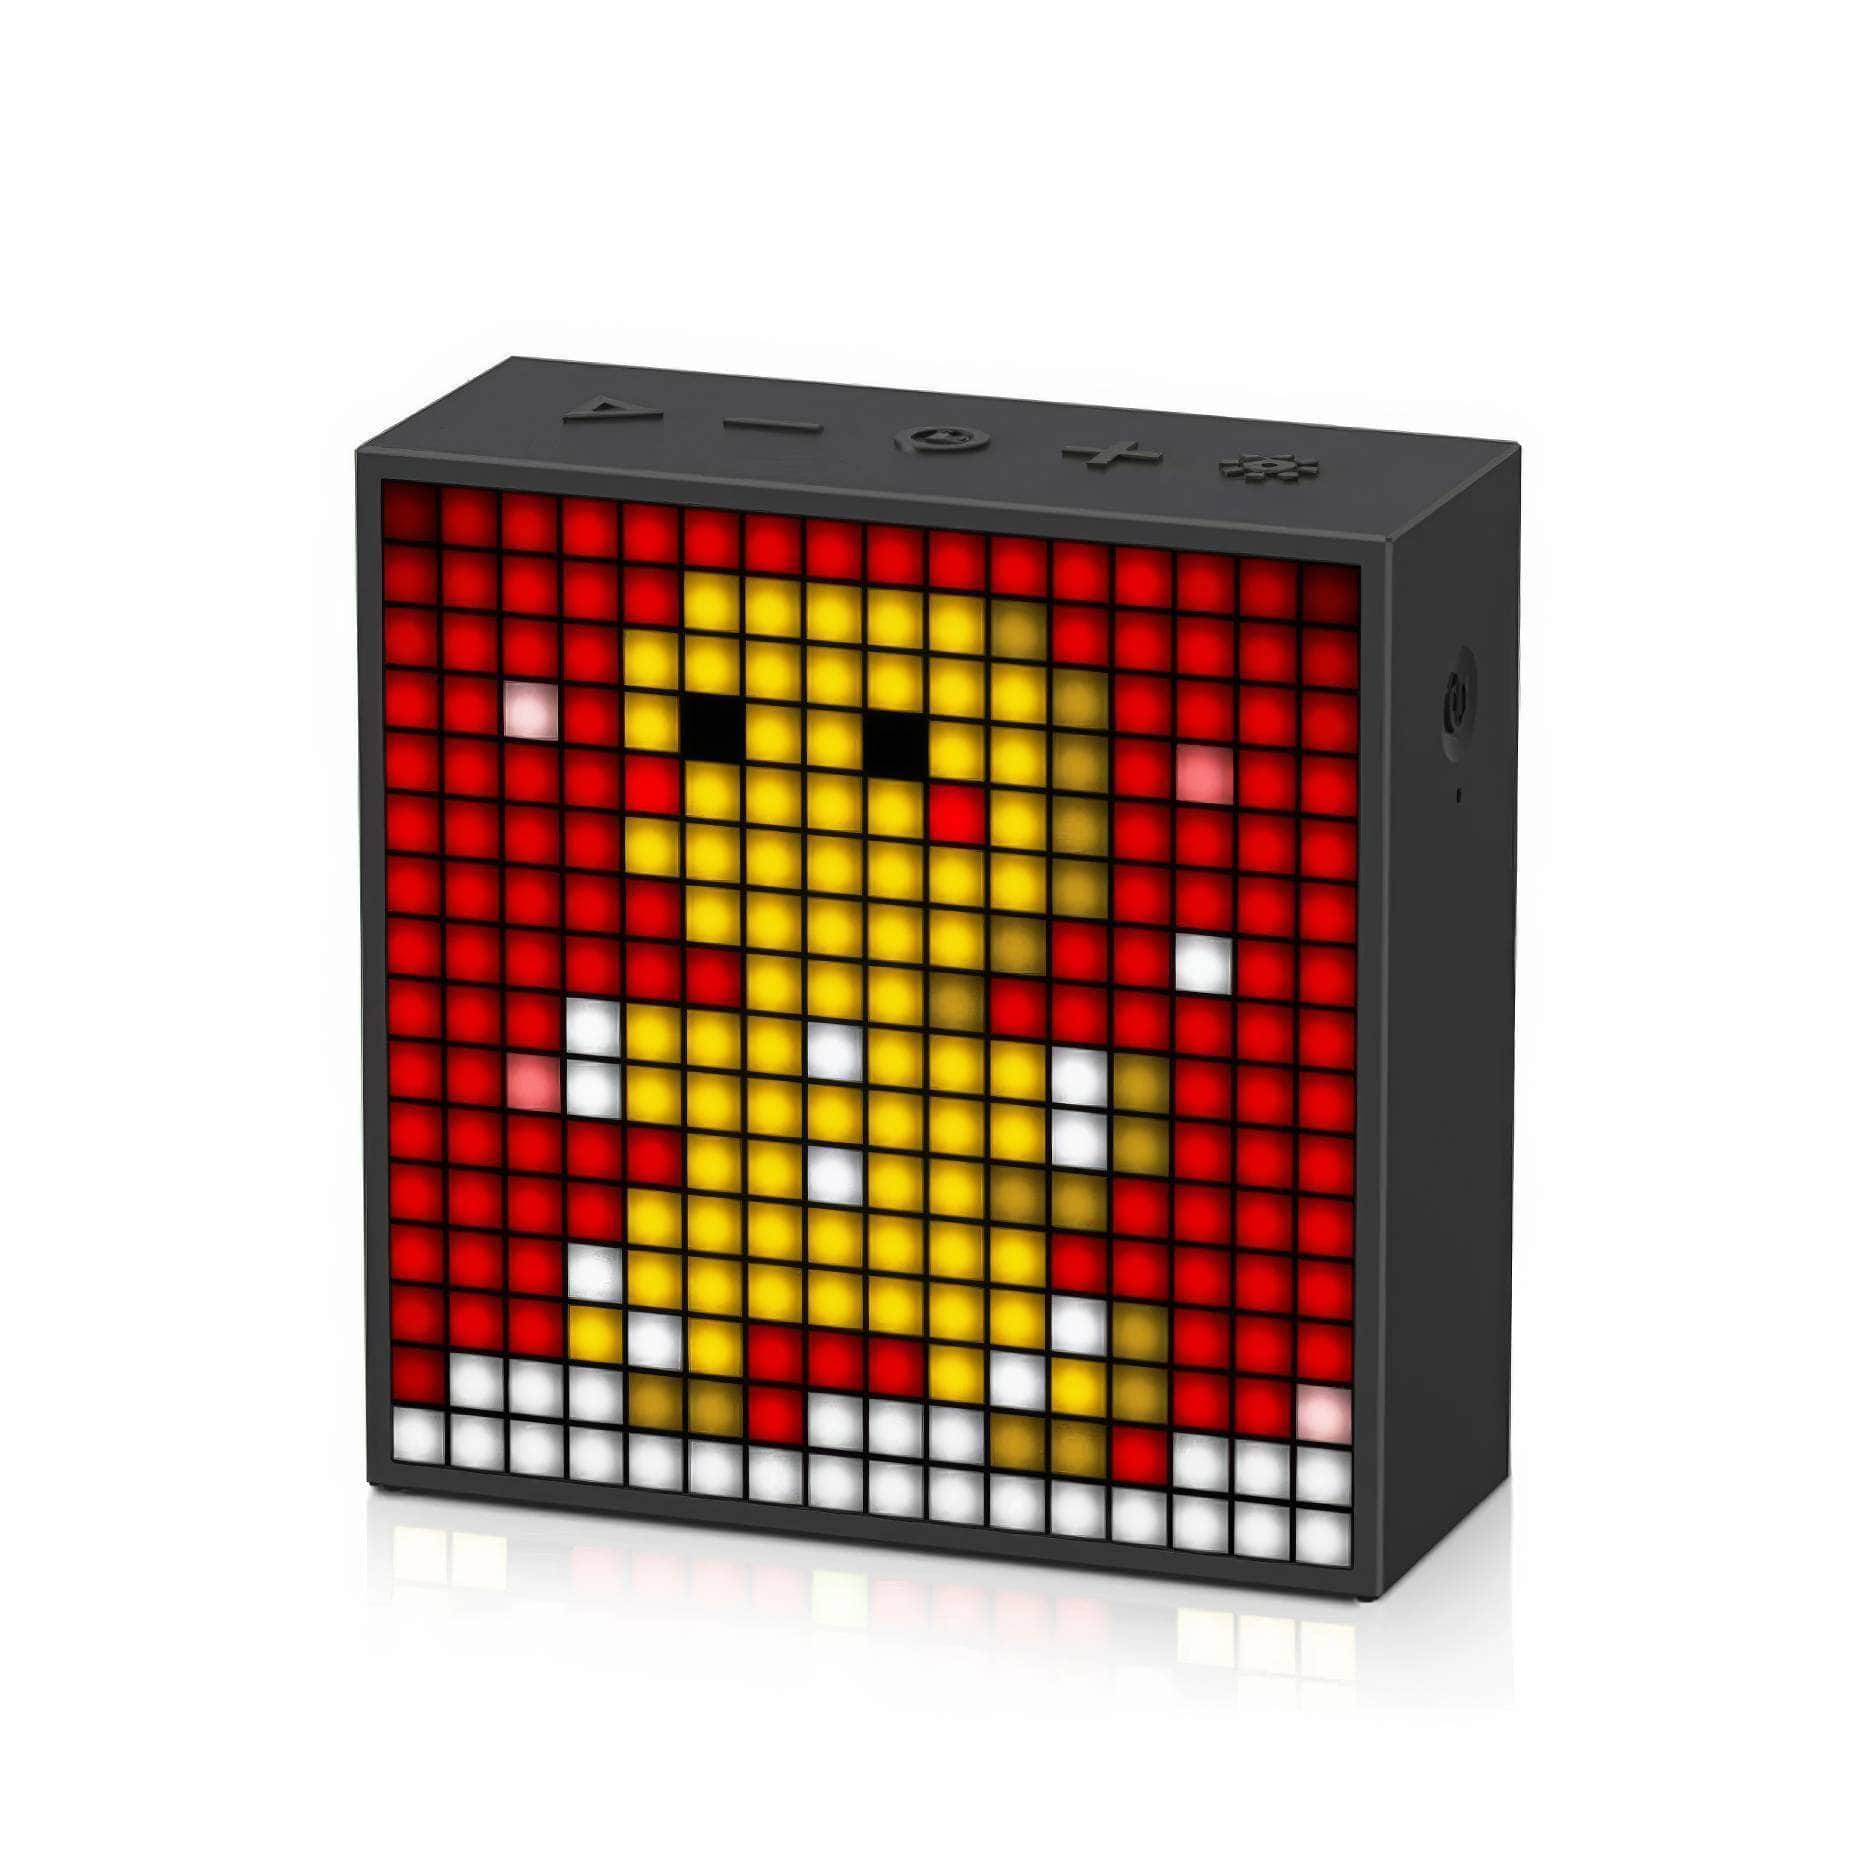 Divoom Timebox Evo Bluetooth Portable Speaker-4 - Clock Alarm, Programmable LED Display for Pixel Art Creation, Unique Gift Option Black